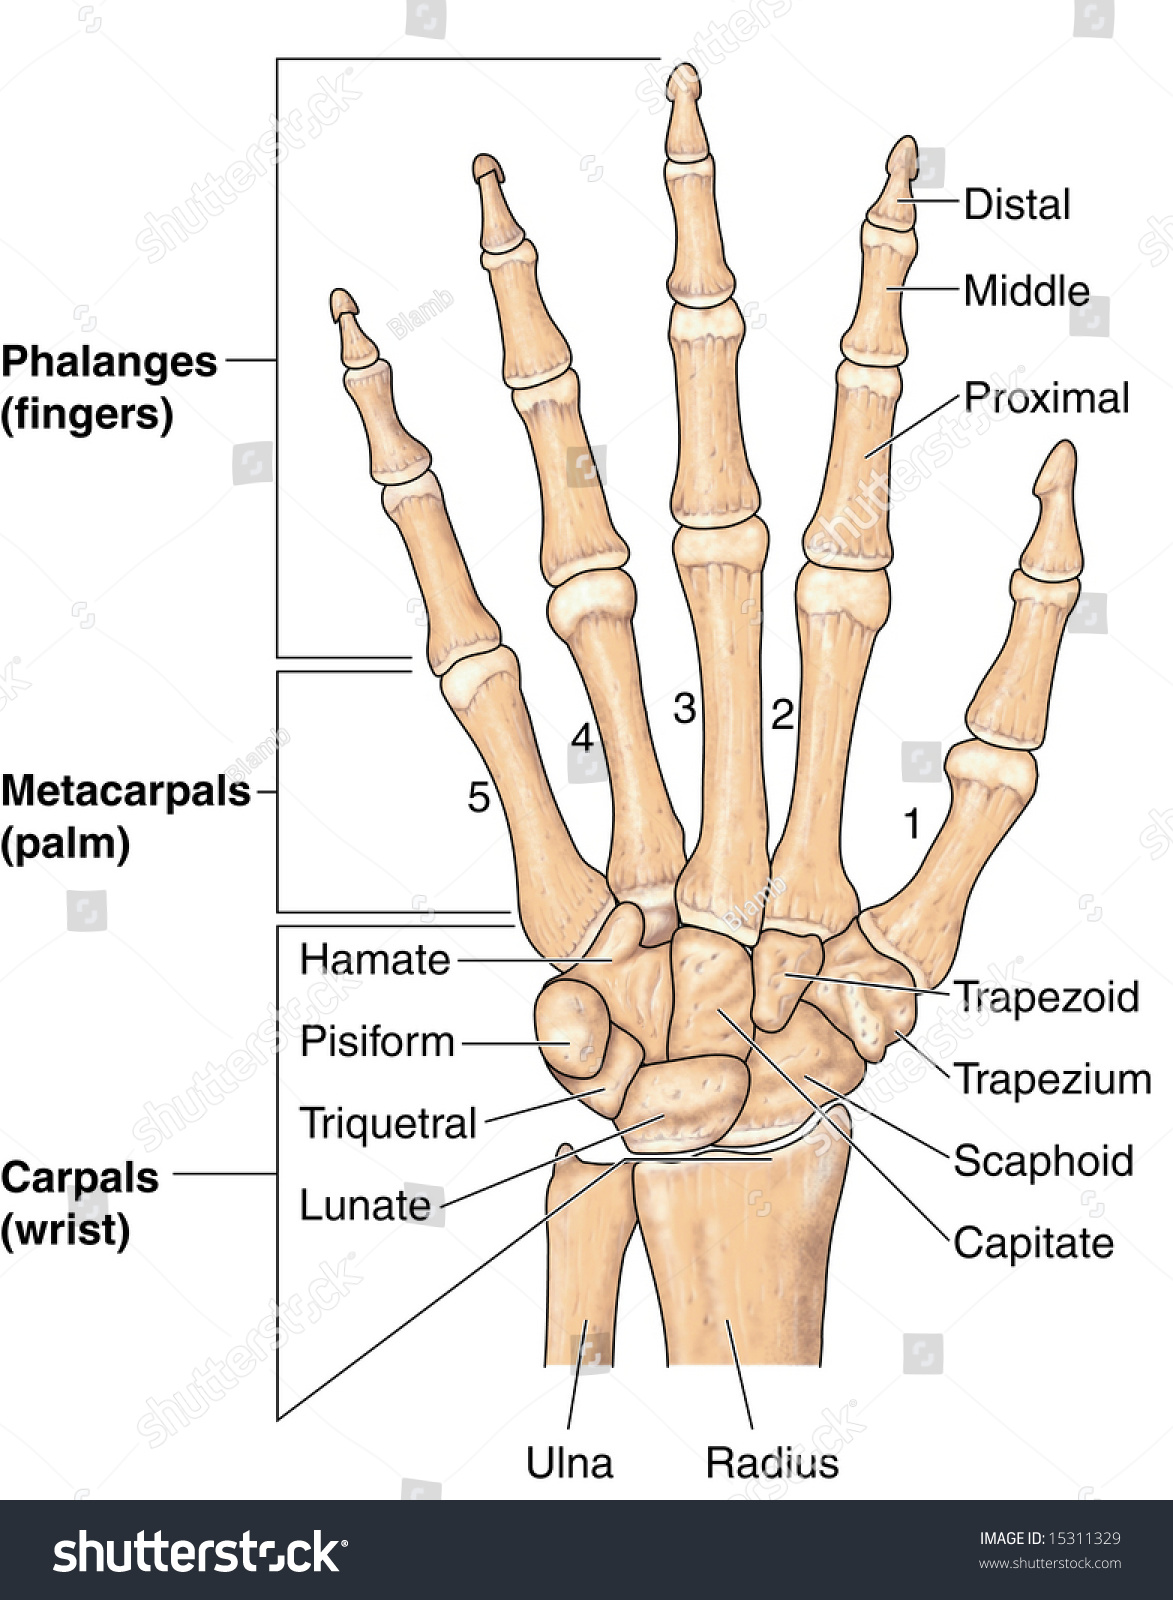 Human Hand Bones Labeled Stock Illustration 15311329 - Shutterstock